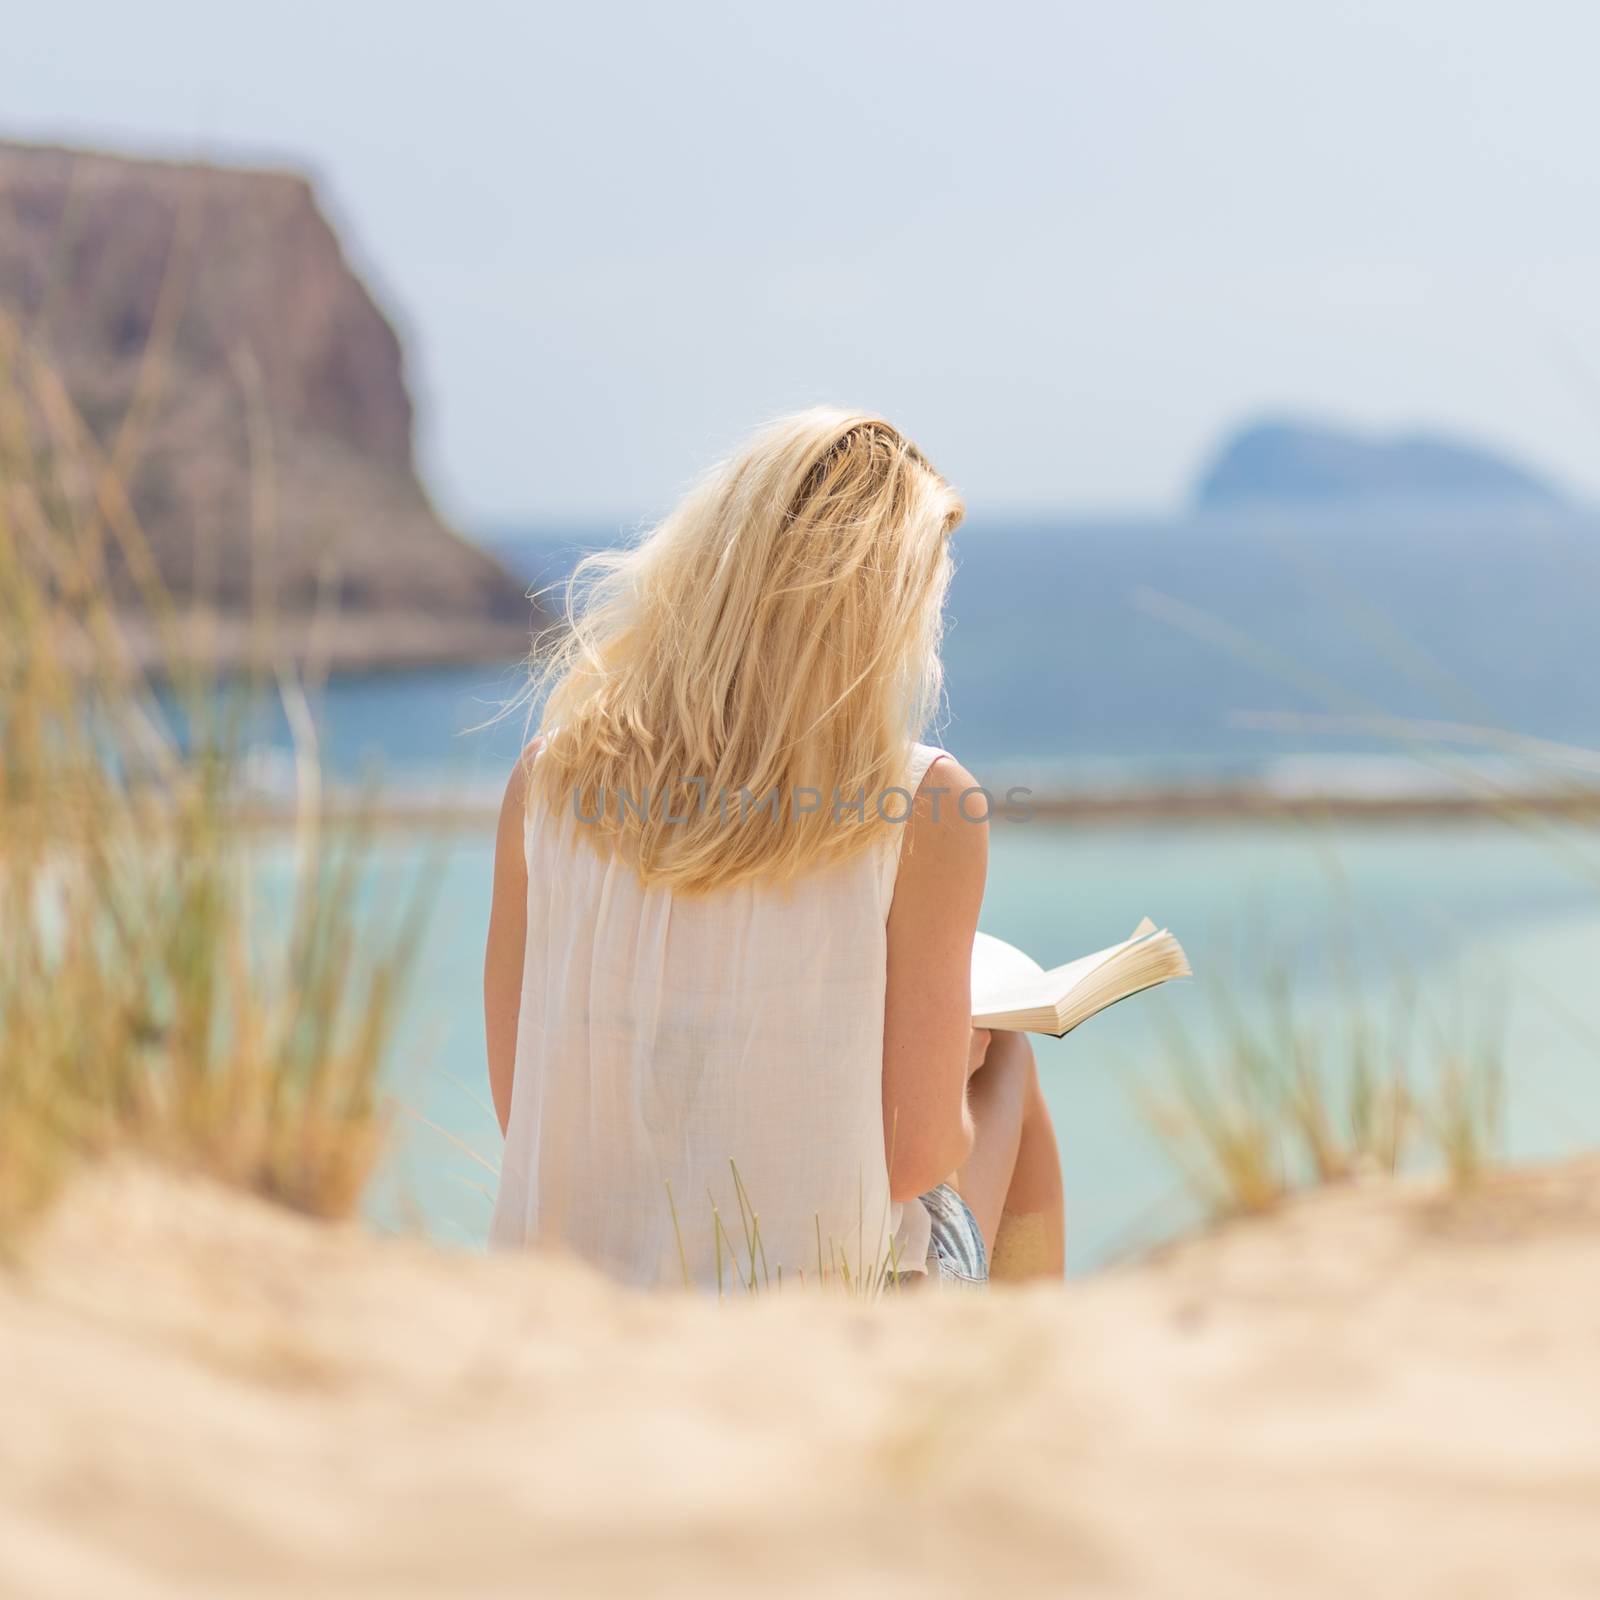 Woman reading book, enjoying sun on beach. by kasto